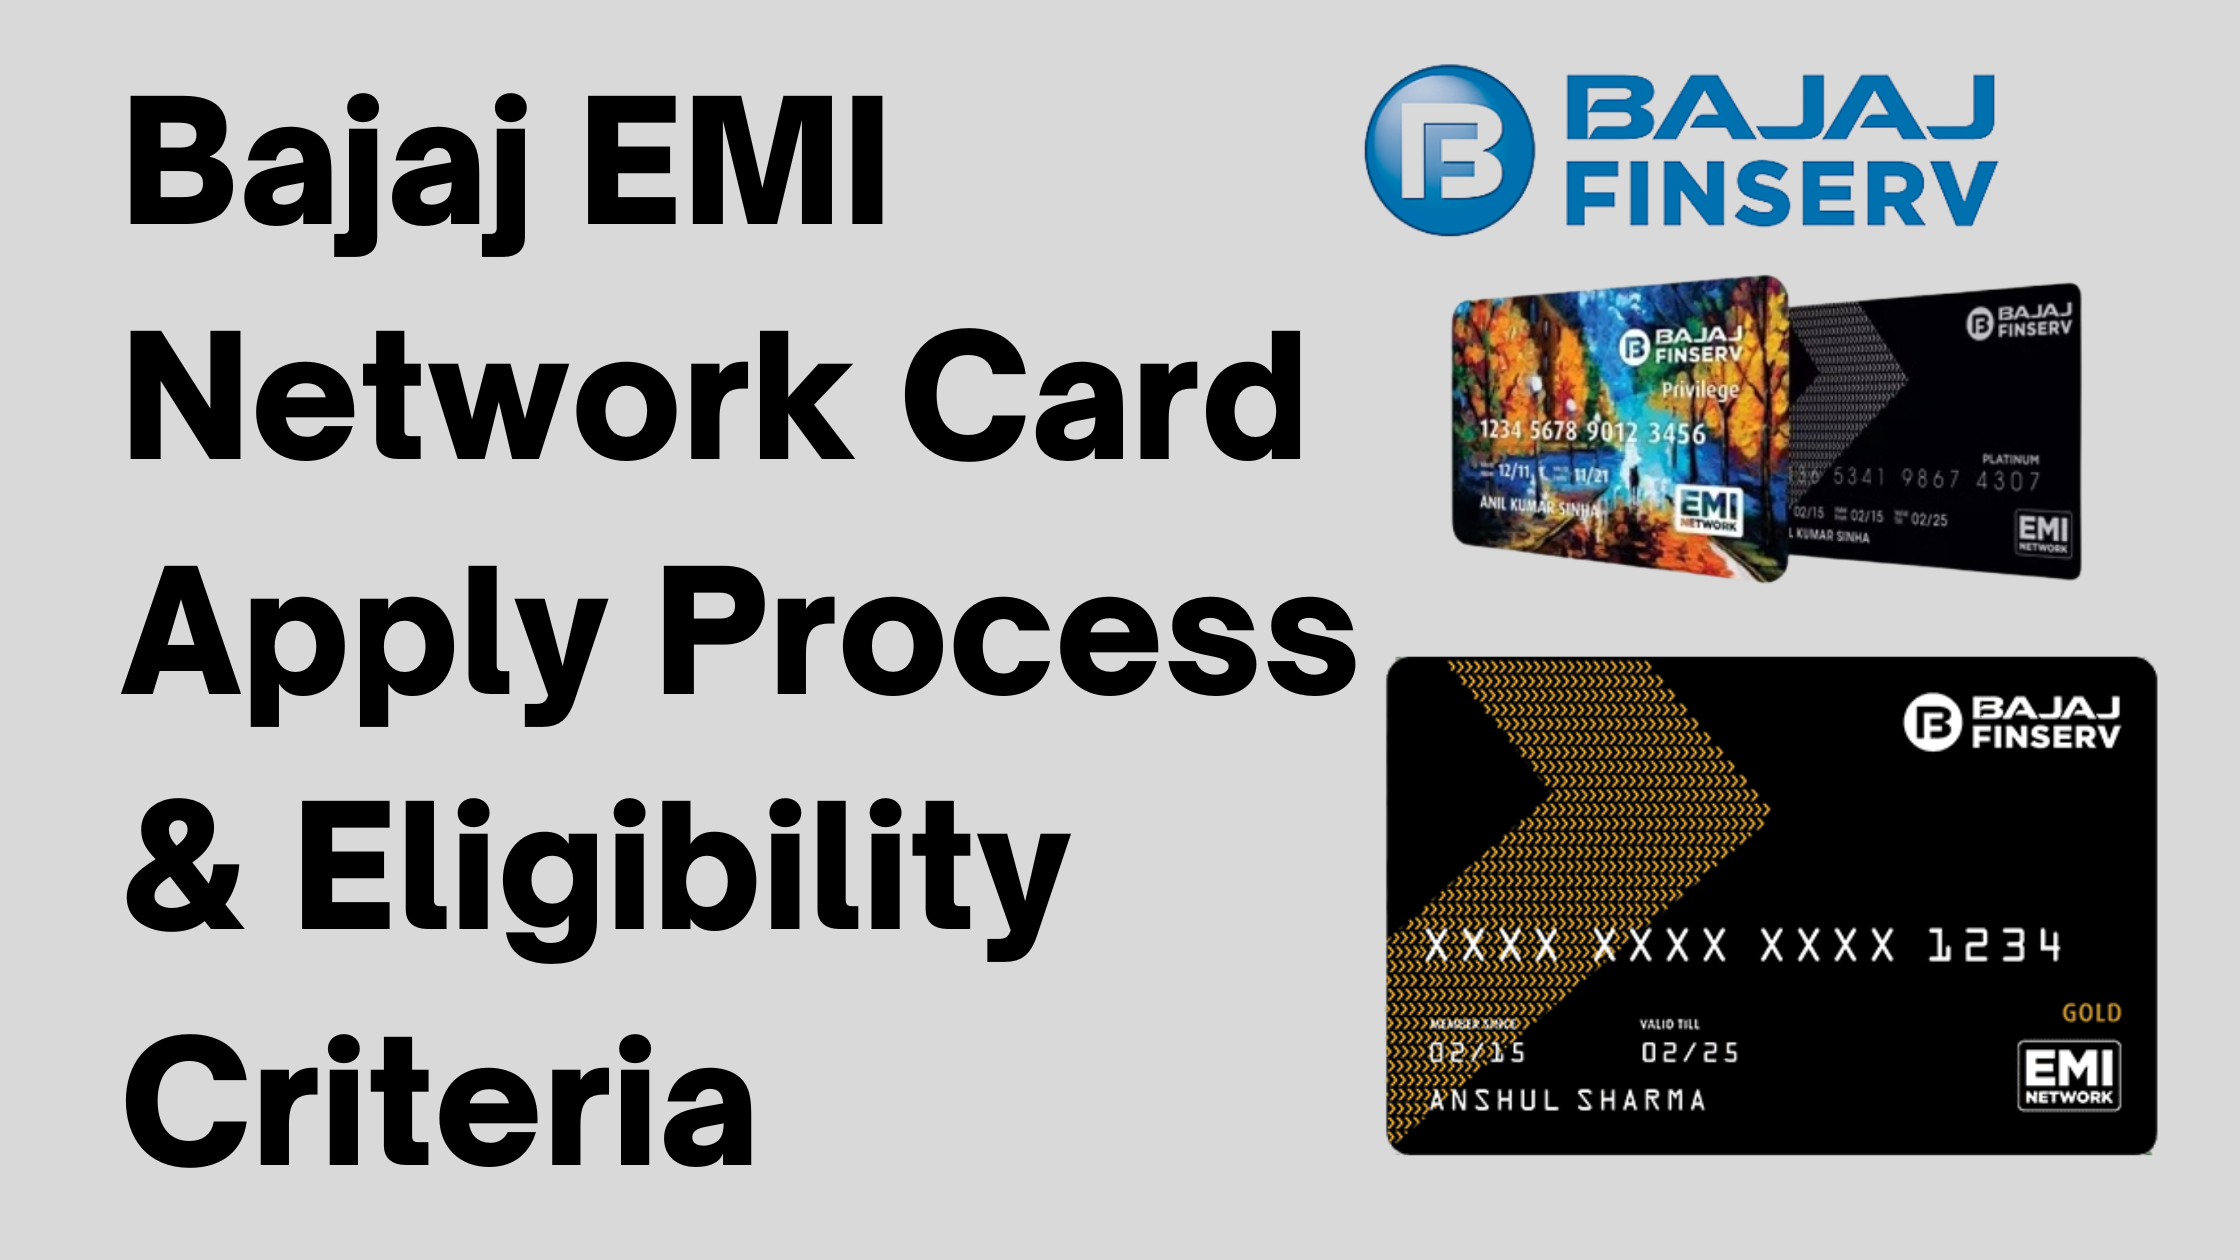 Bajaj EMI Network Card Apply Process